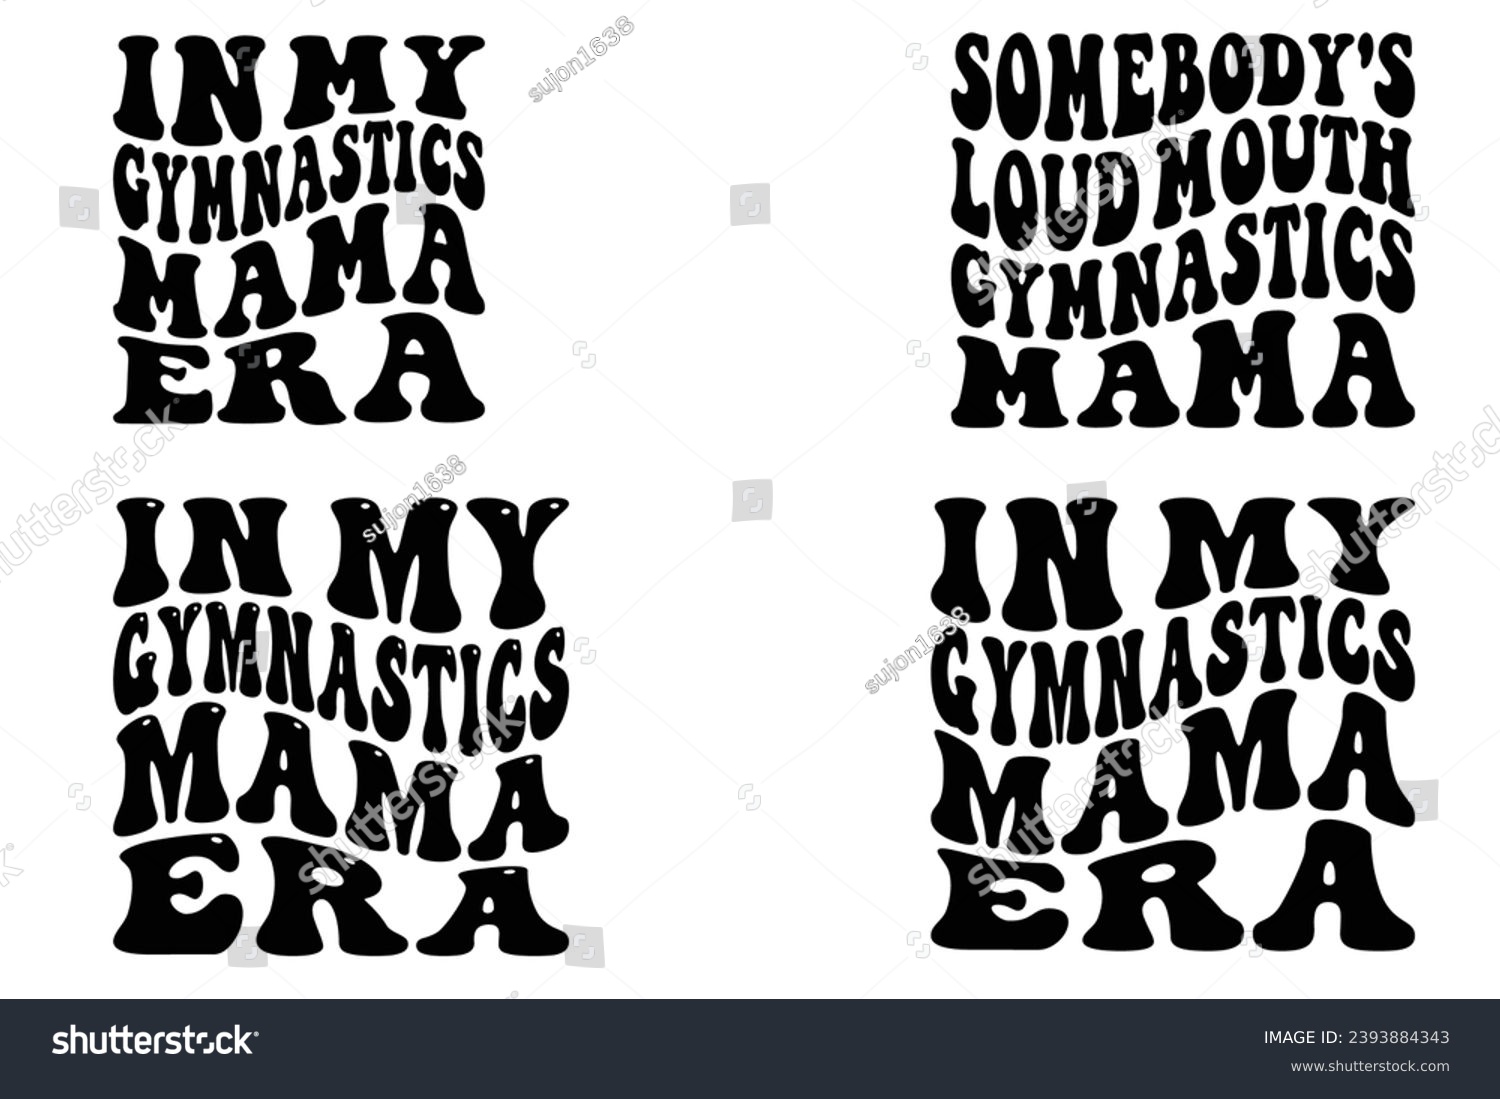 SVG of  In my Gymnastics Mama era, Somebody's Loud Mouth Gymnastics Mama retro wavy T-shirt designs svg